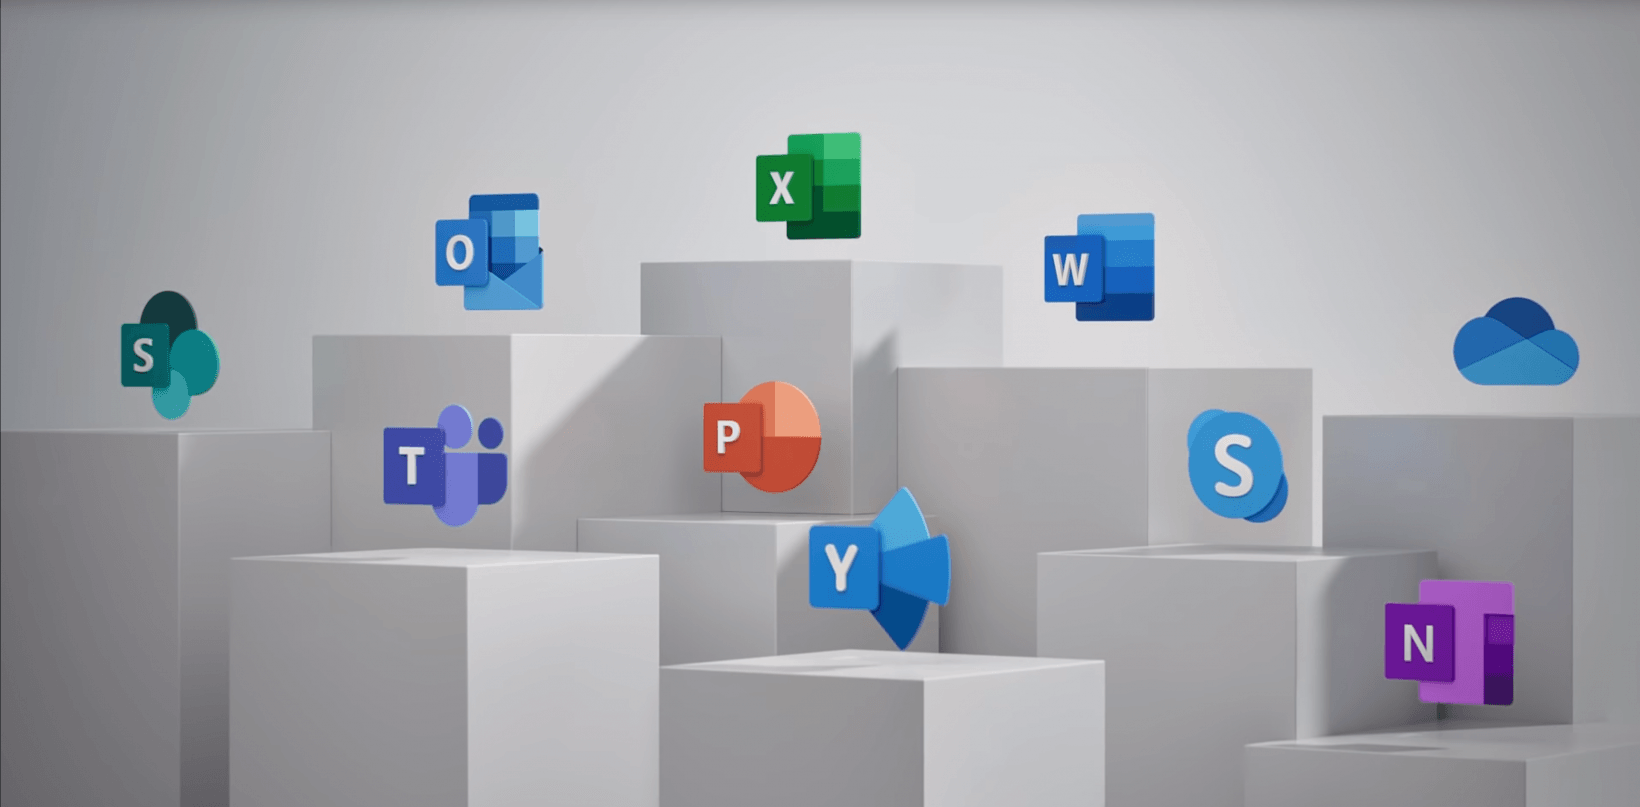 Microsoft Office 2018 Logo - Microsoft's new Office logos are a beautiful glimpse of the future